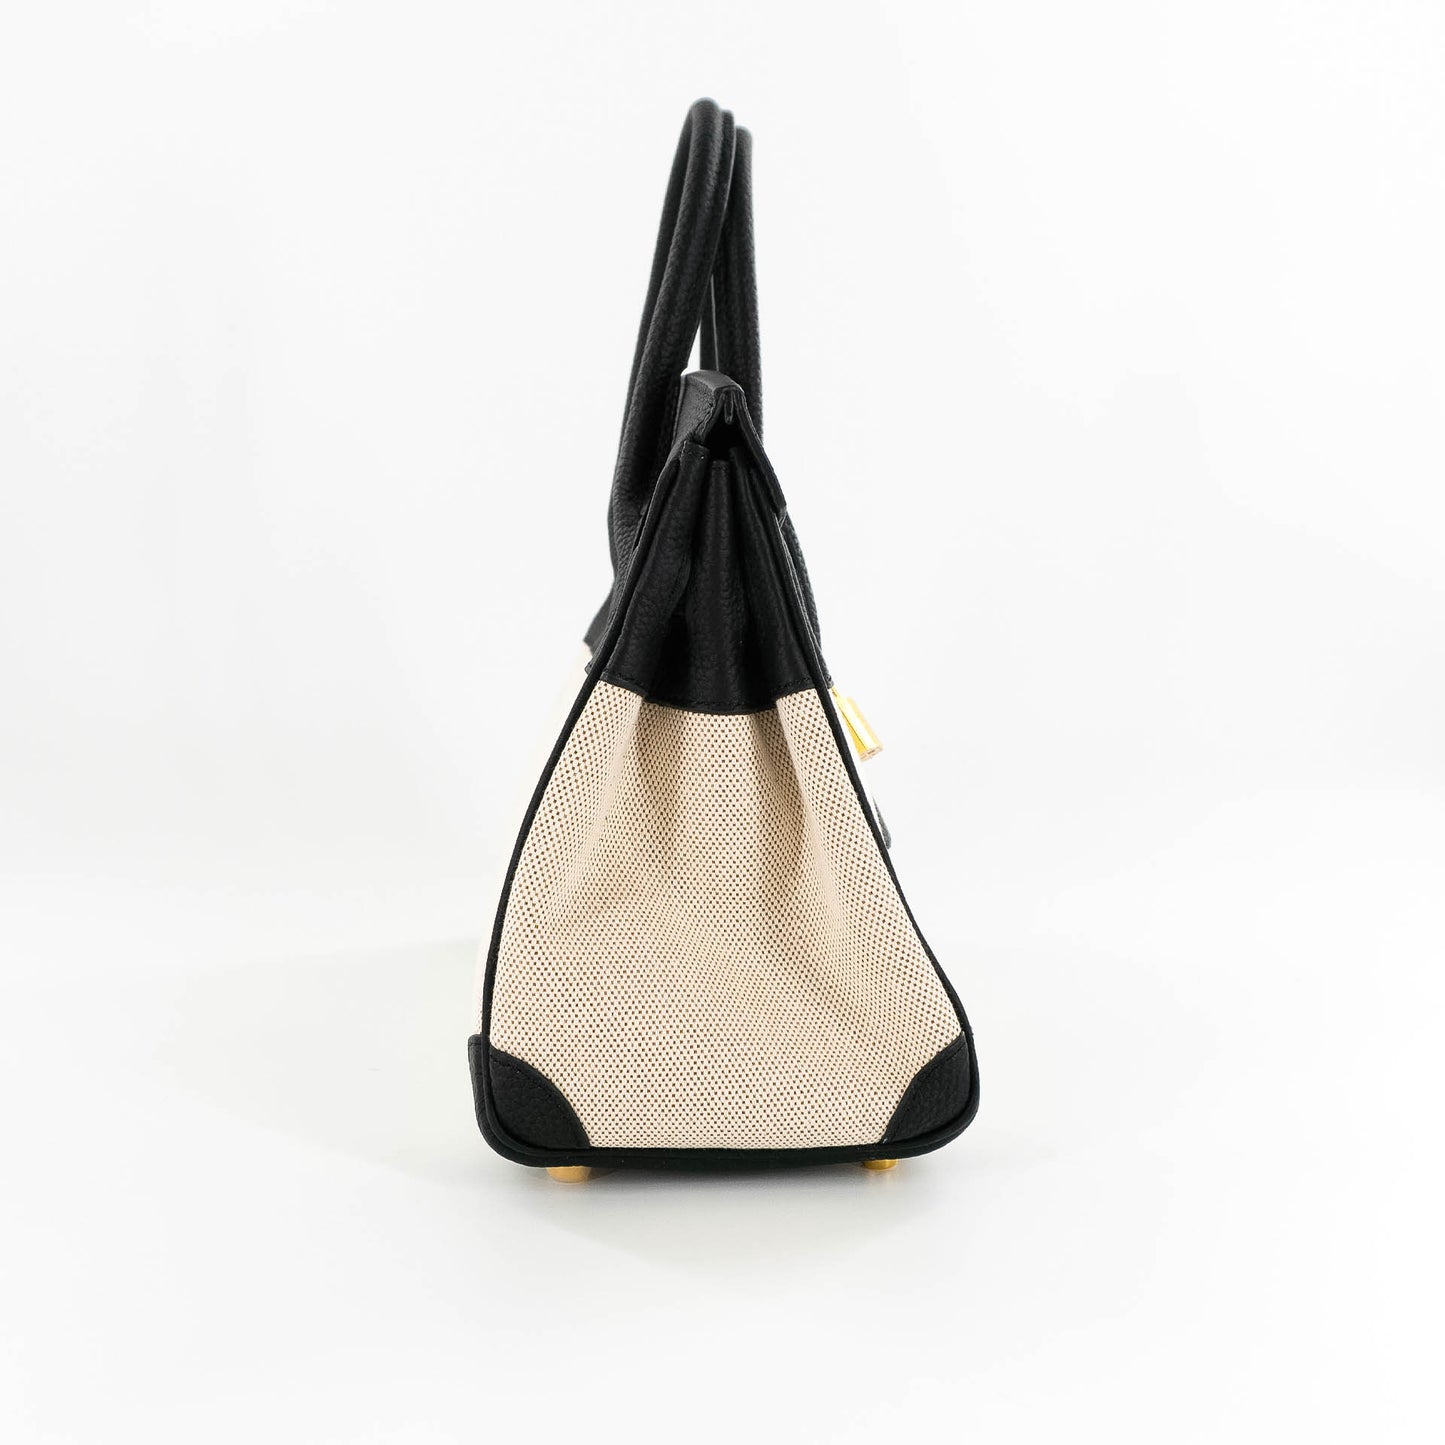 Duchess Handbag in Linen and Black Leather